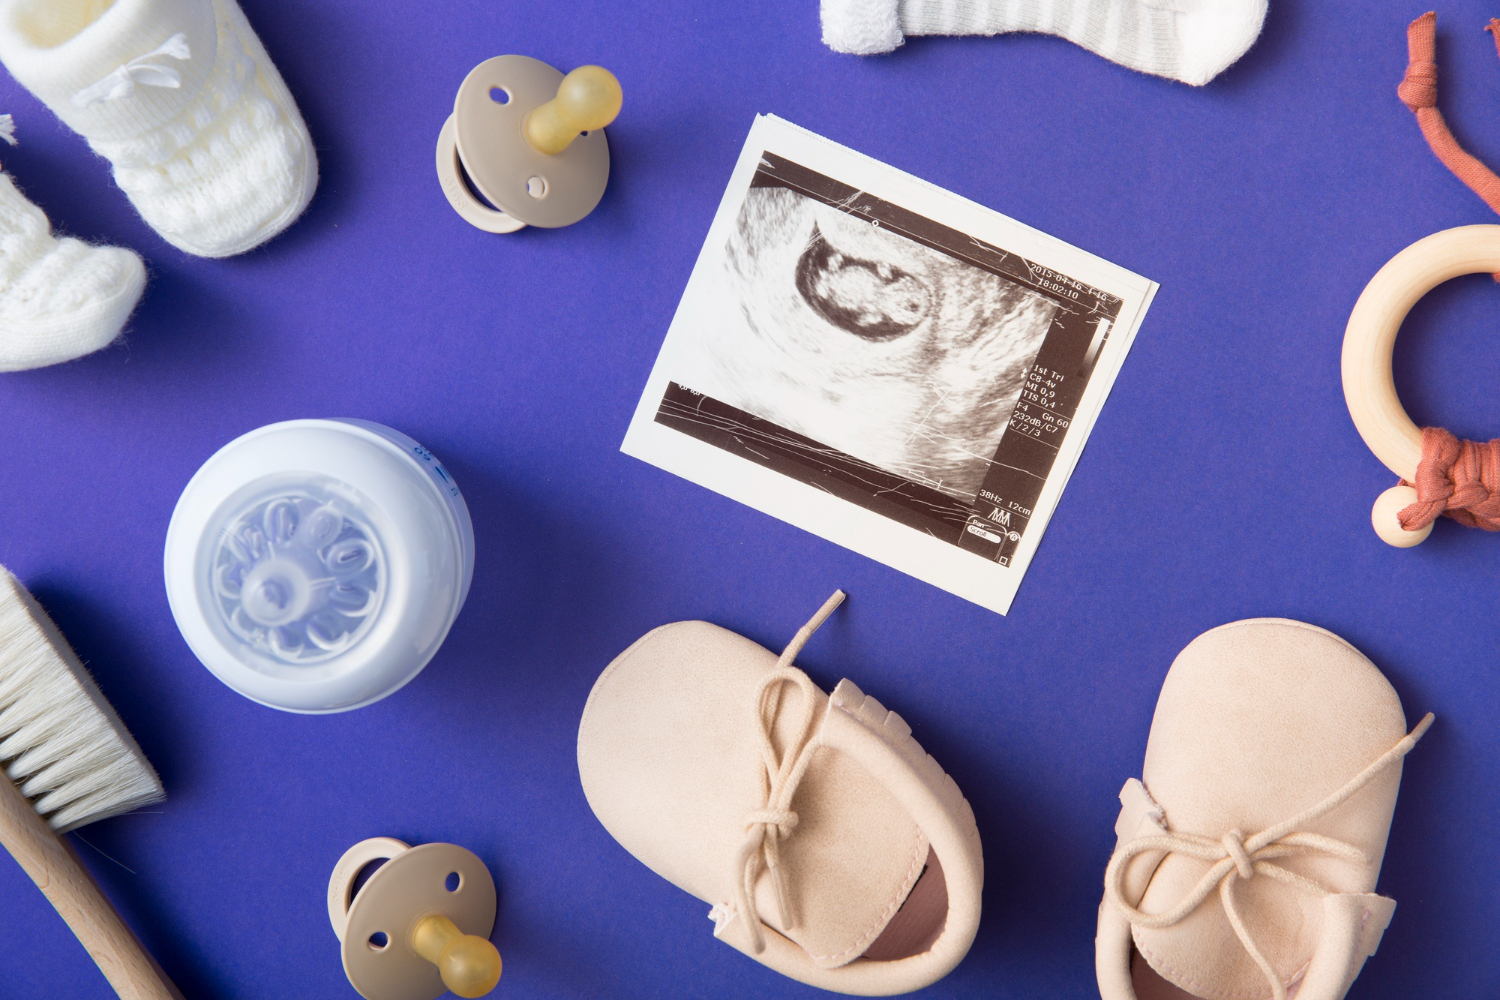 Newborn essentials and ultrasound, perfect baby shower gift ideas, on blue